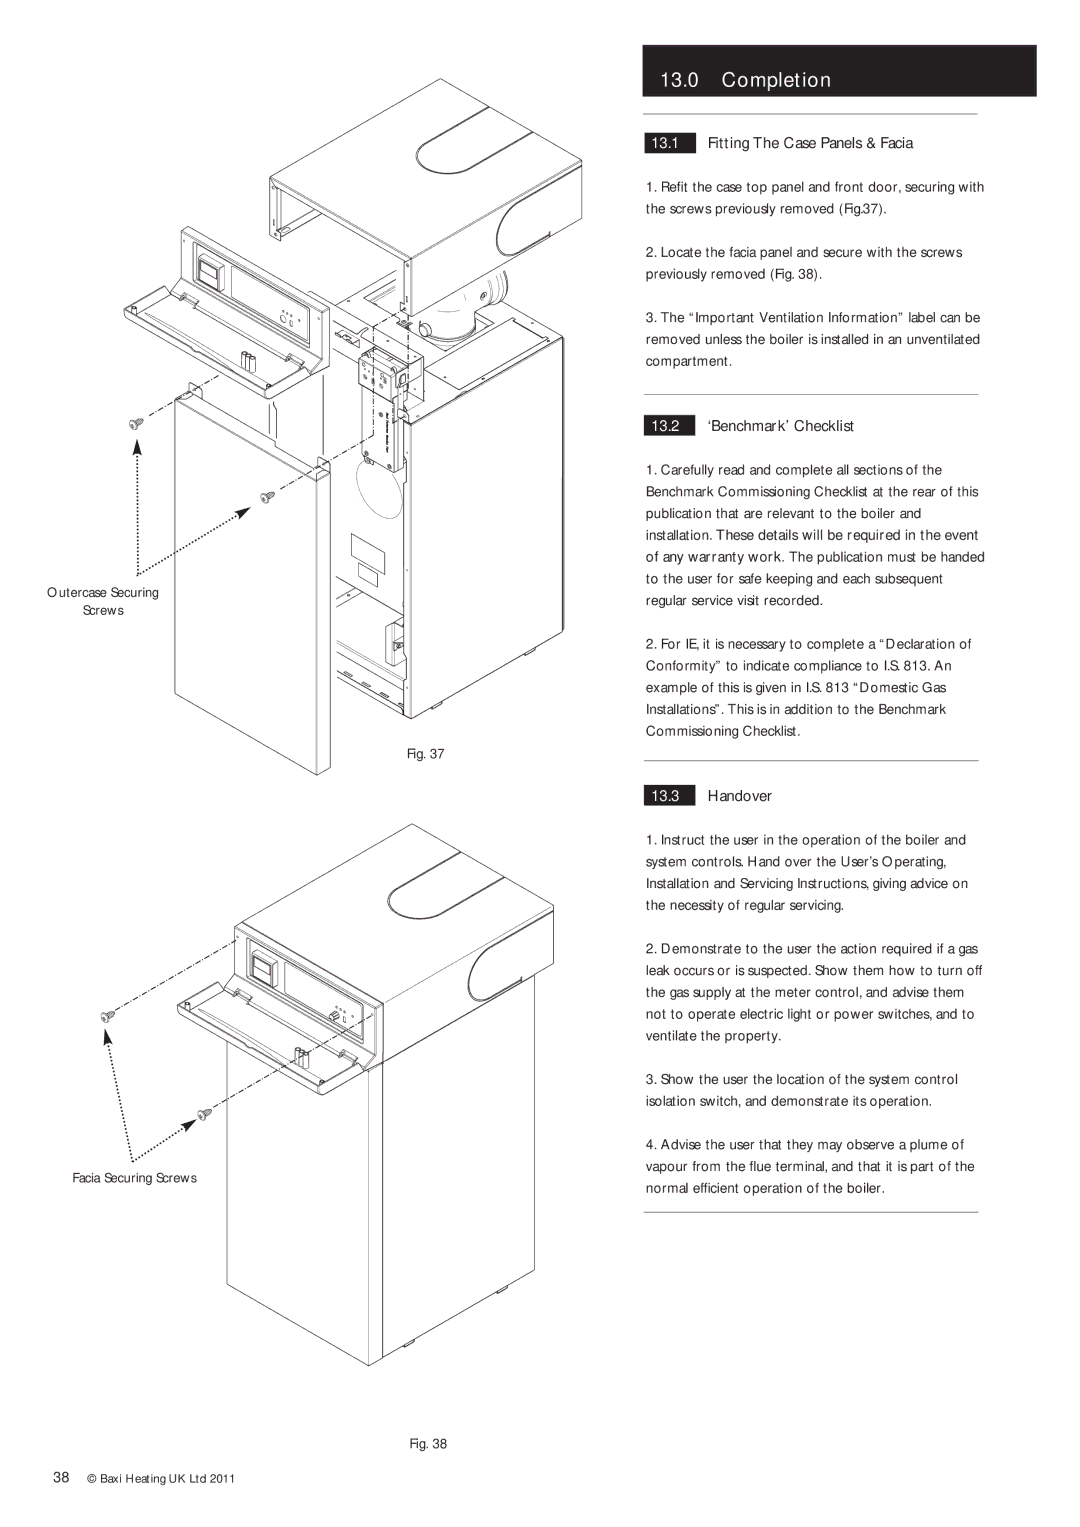 Baxi Potterton Gold FSB 30 HE manual Completion, Fitting The Case Panels & Facia, 13.2 ‘Benchmark’ Checklist, Handover 